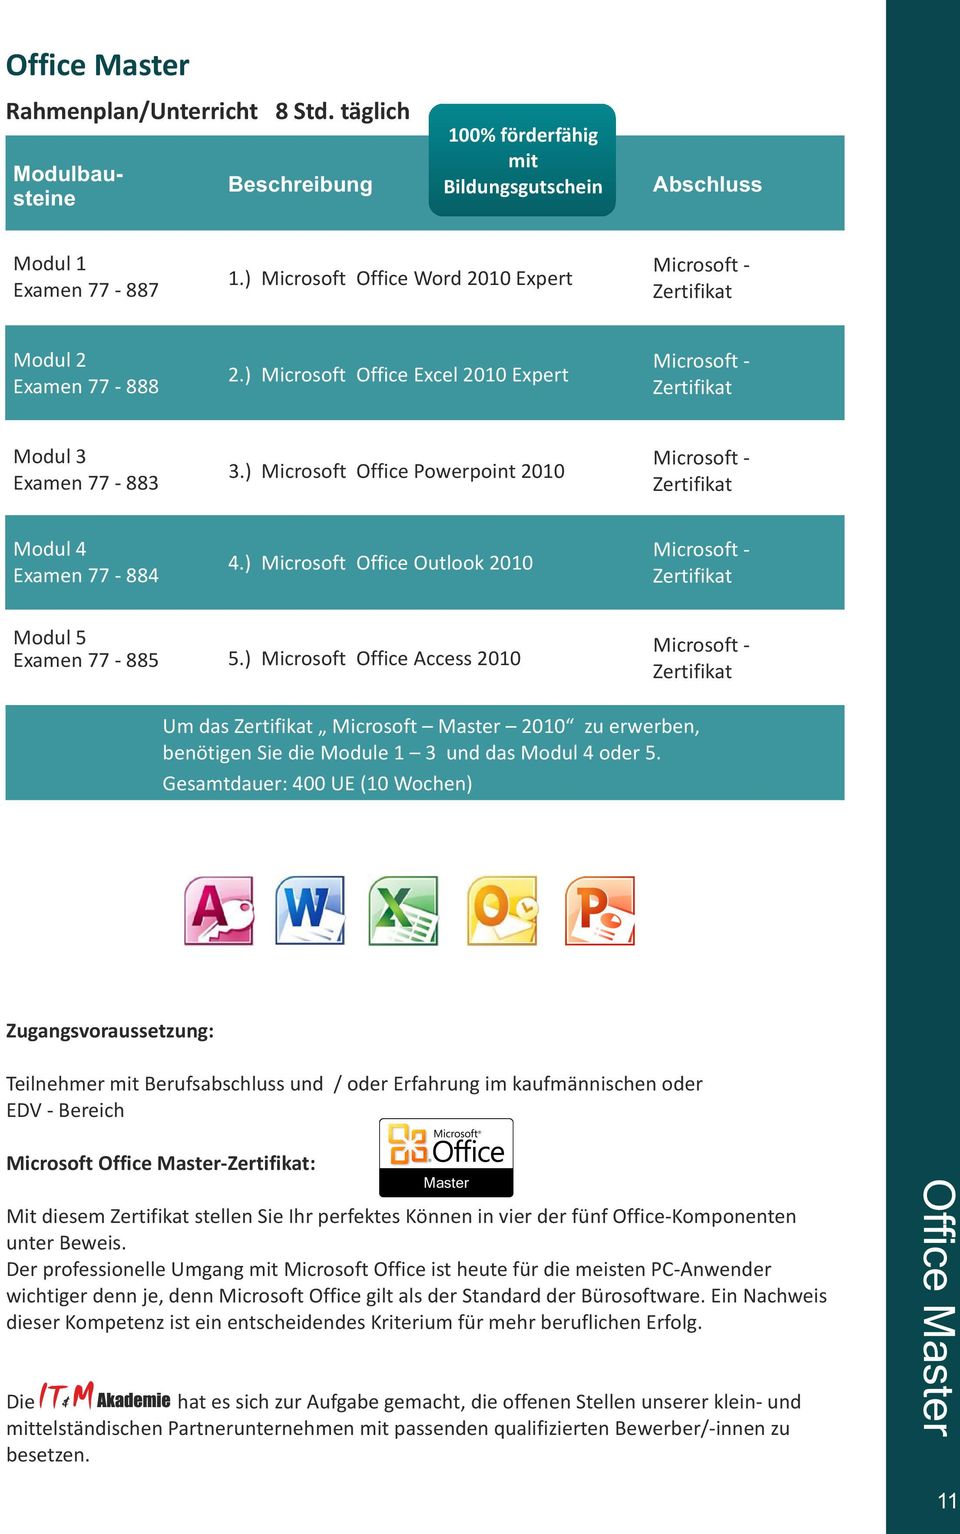 ) Microsoft Office Powerpoint 2010 Microsoft - Zertifikat Modul 4 Examen 77-884 4.) Microsoft Office Outlook 2010 Microsoft - Zertifikat Modul 5 Examen 77-885 5.